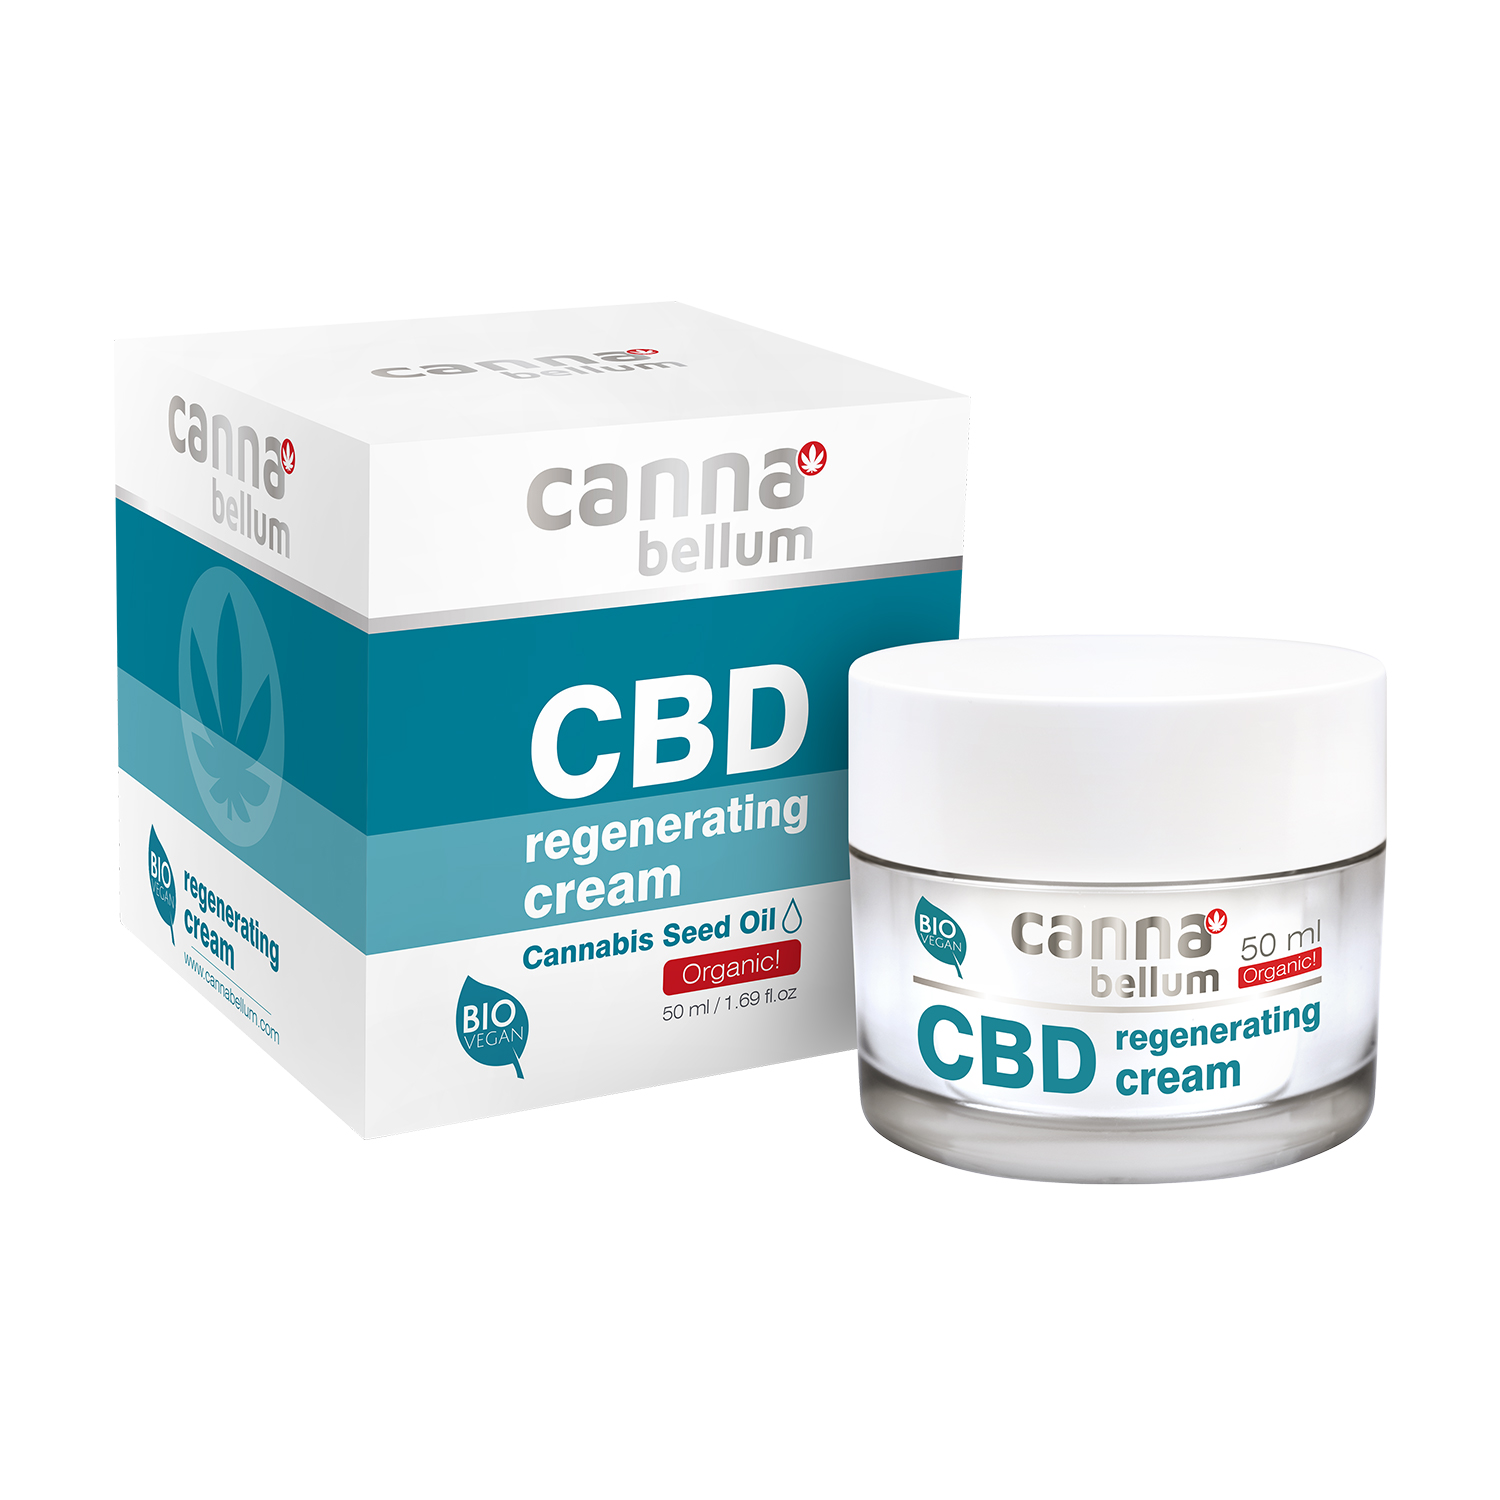 Cannabellum CBD regenerating cream 50ml P1253 komplet WEB 33